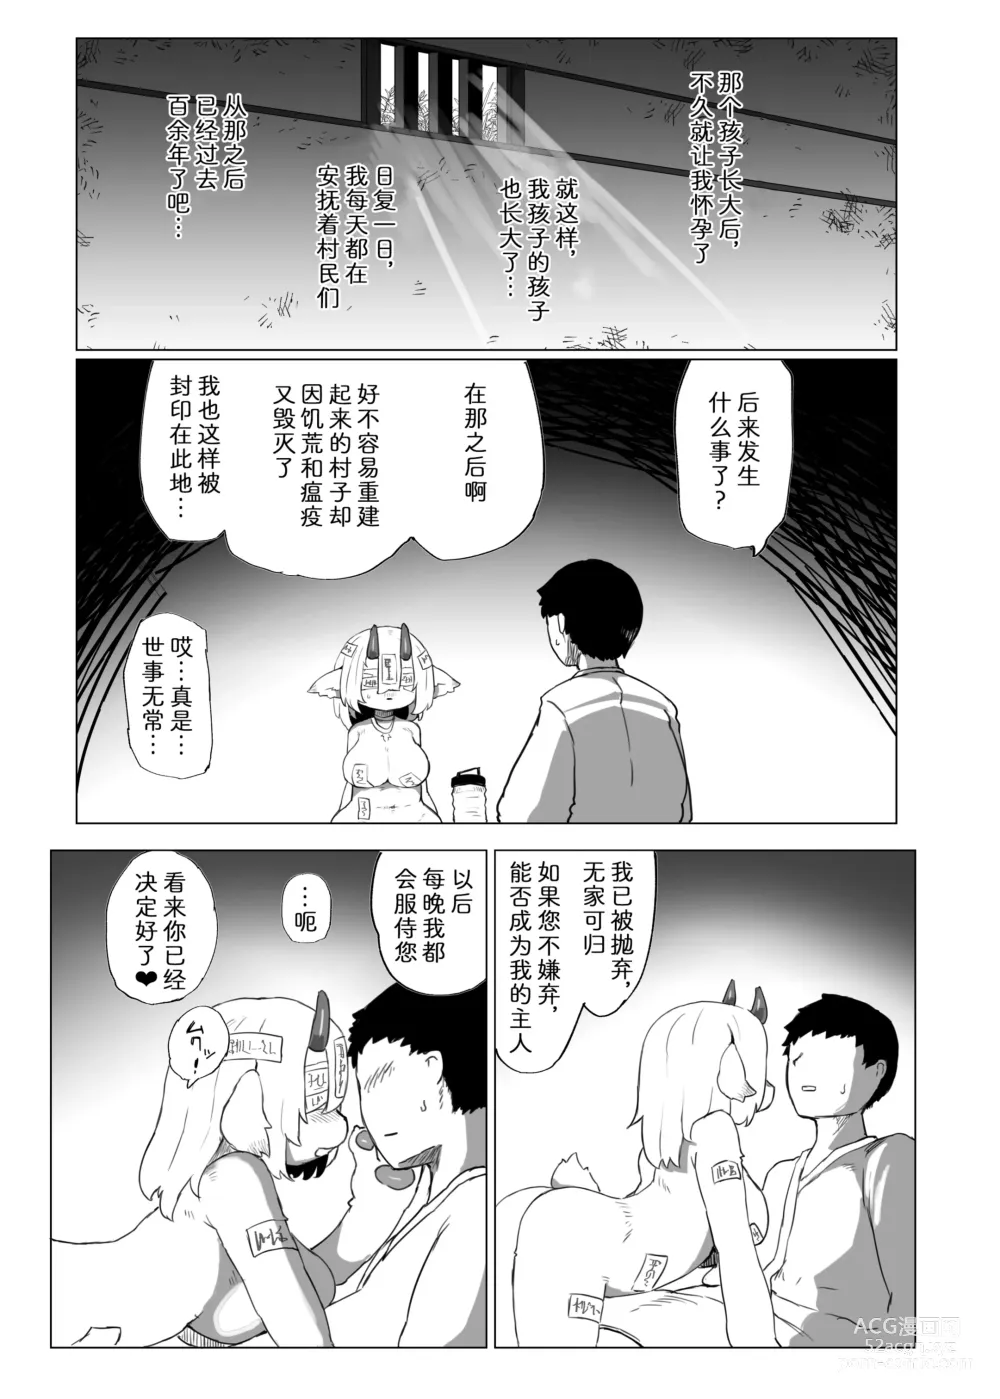 Page 25 of doujinshi 吃什么就要生什么!食人鬼可畏酱